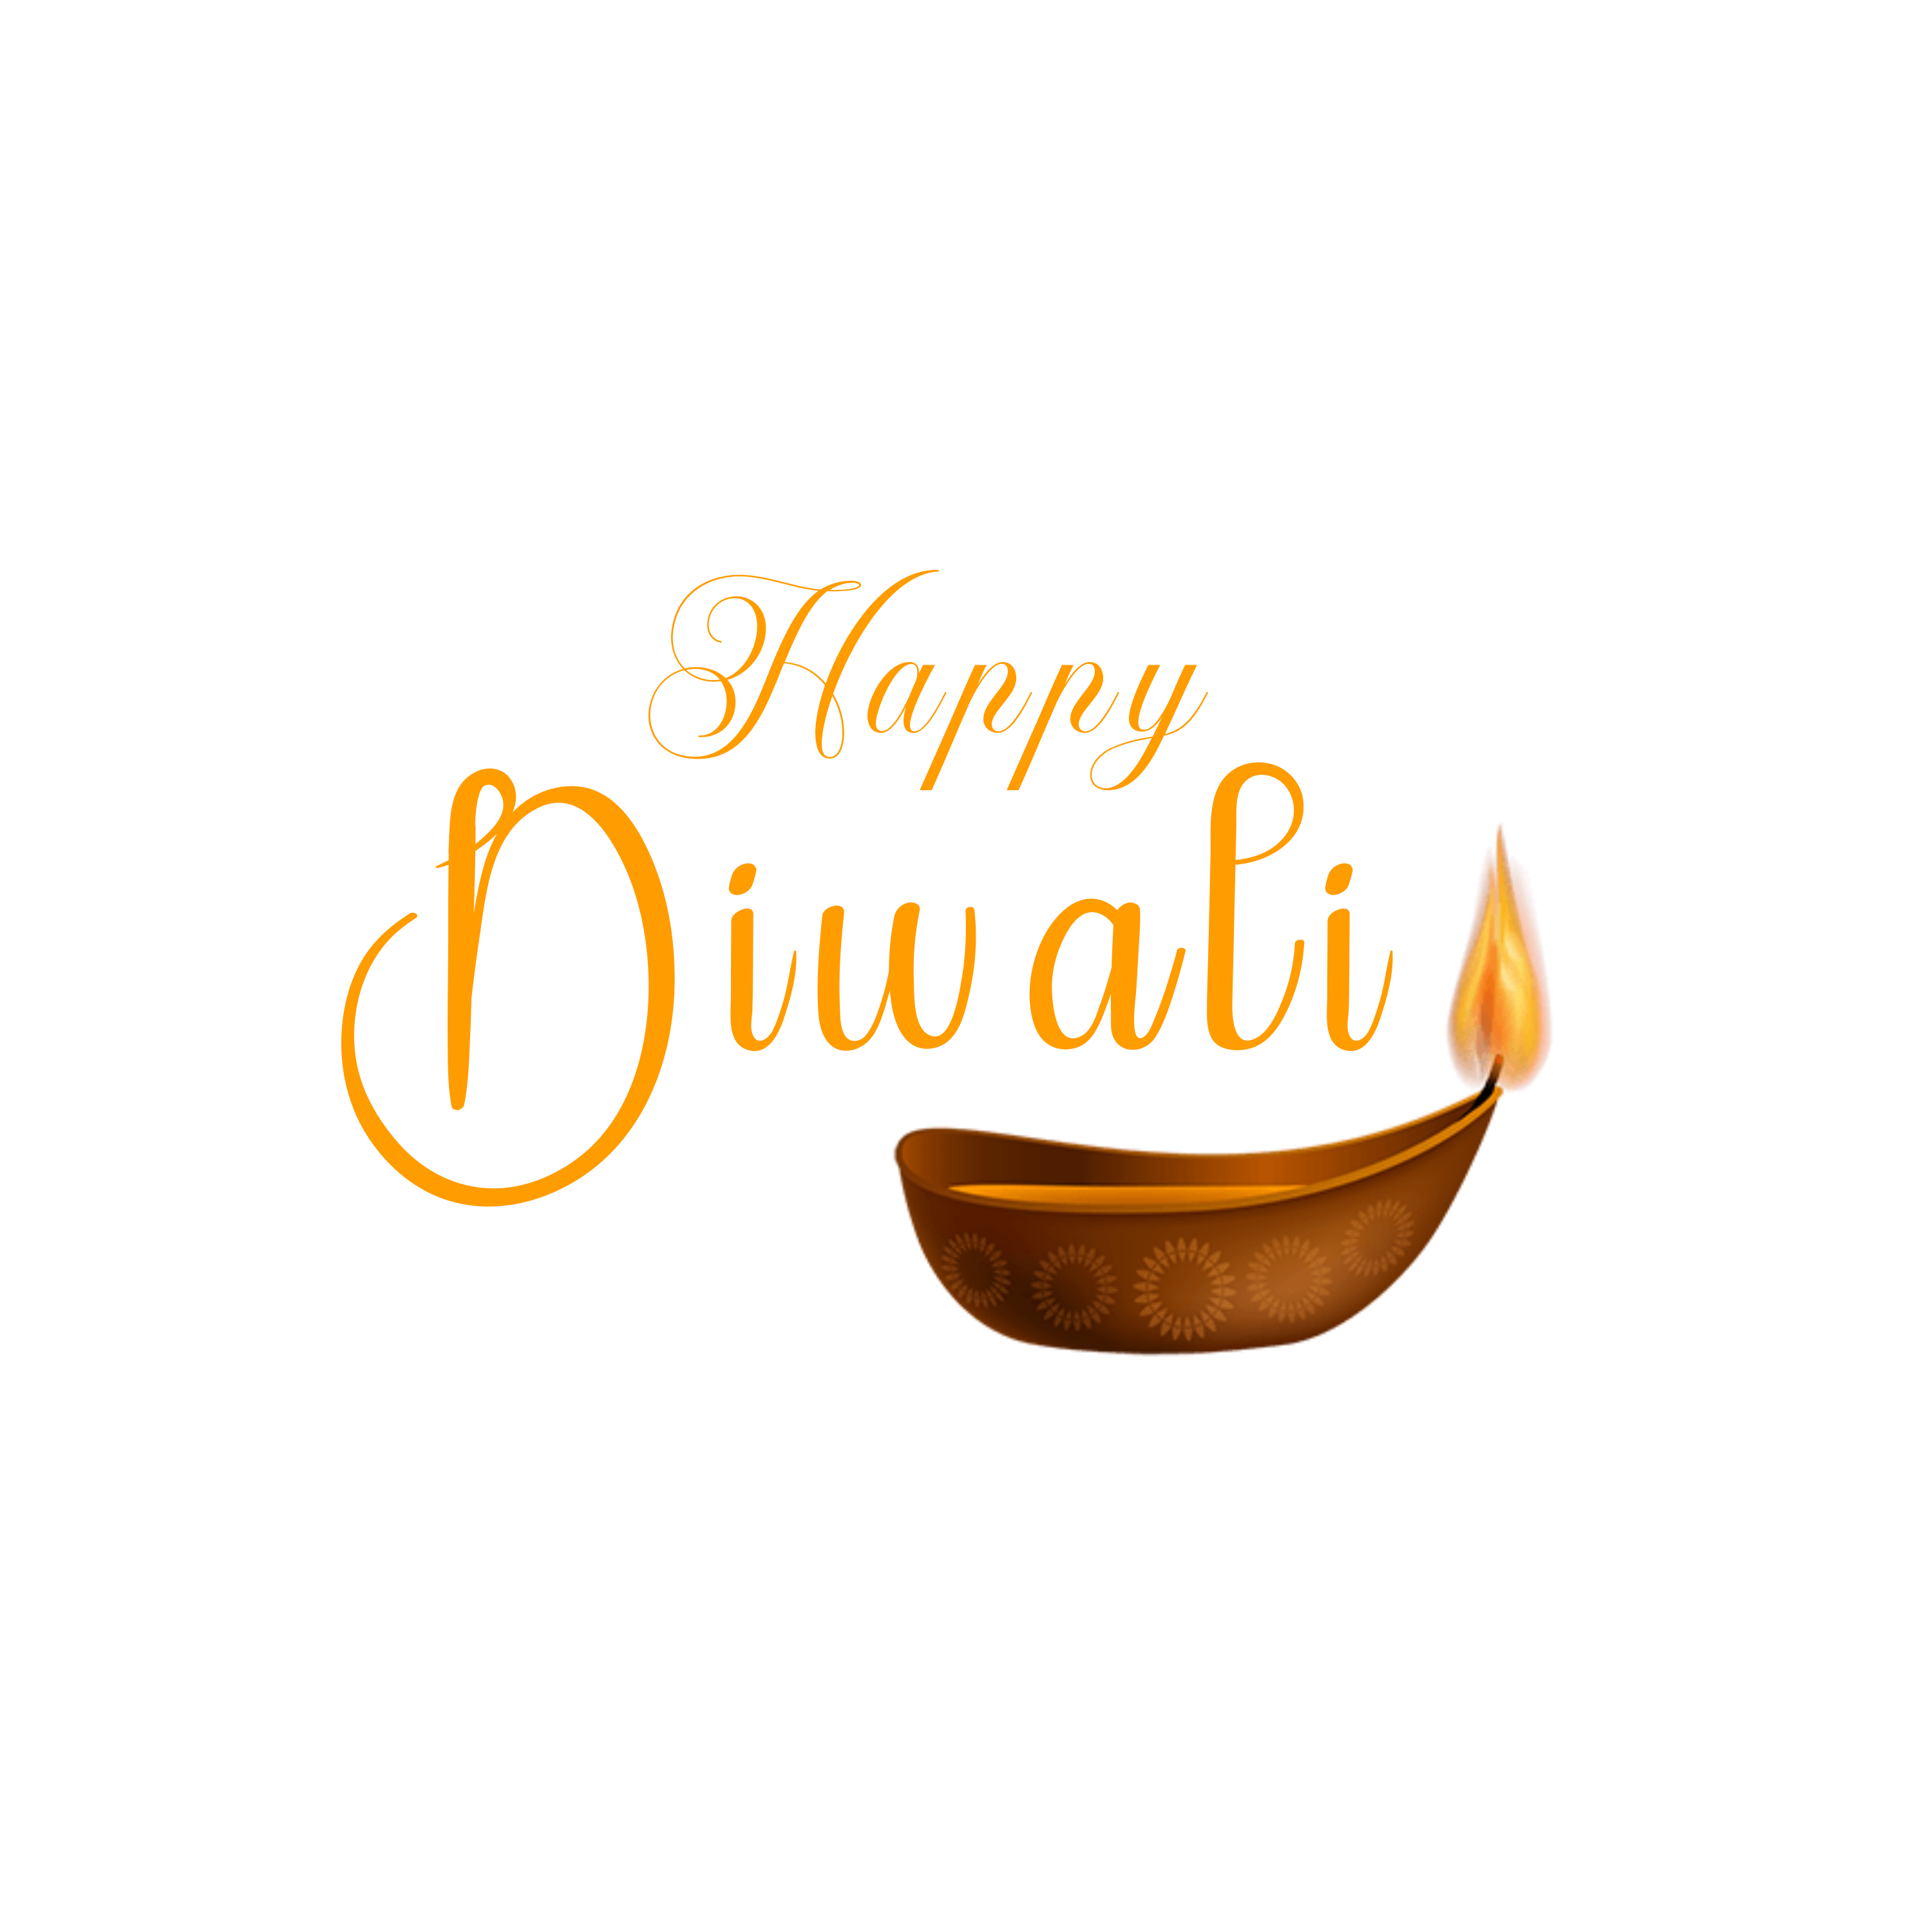 Free Happy Diwali text PNG